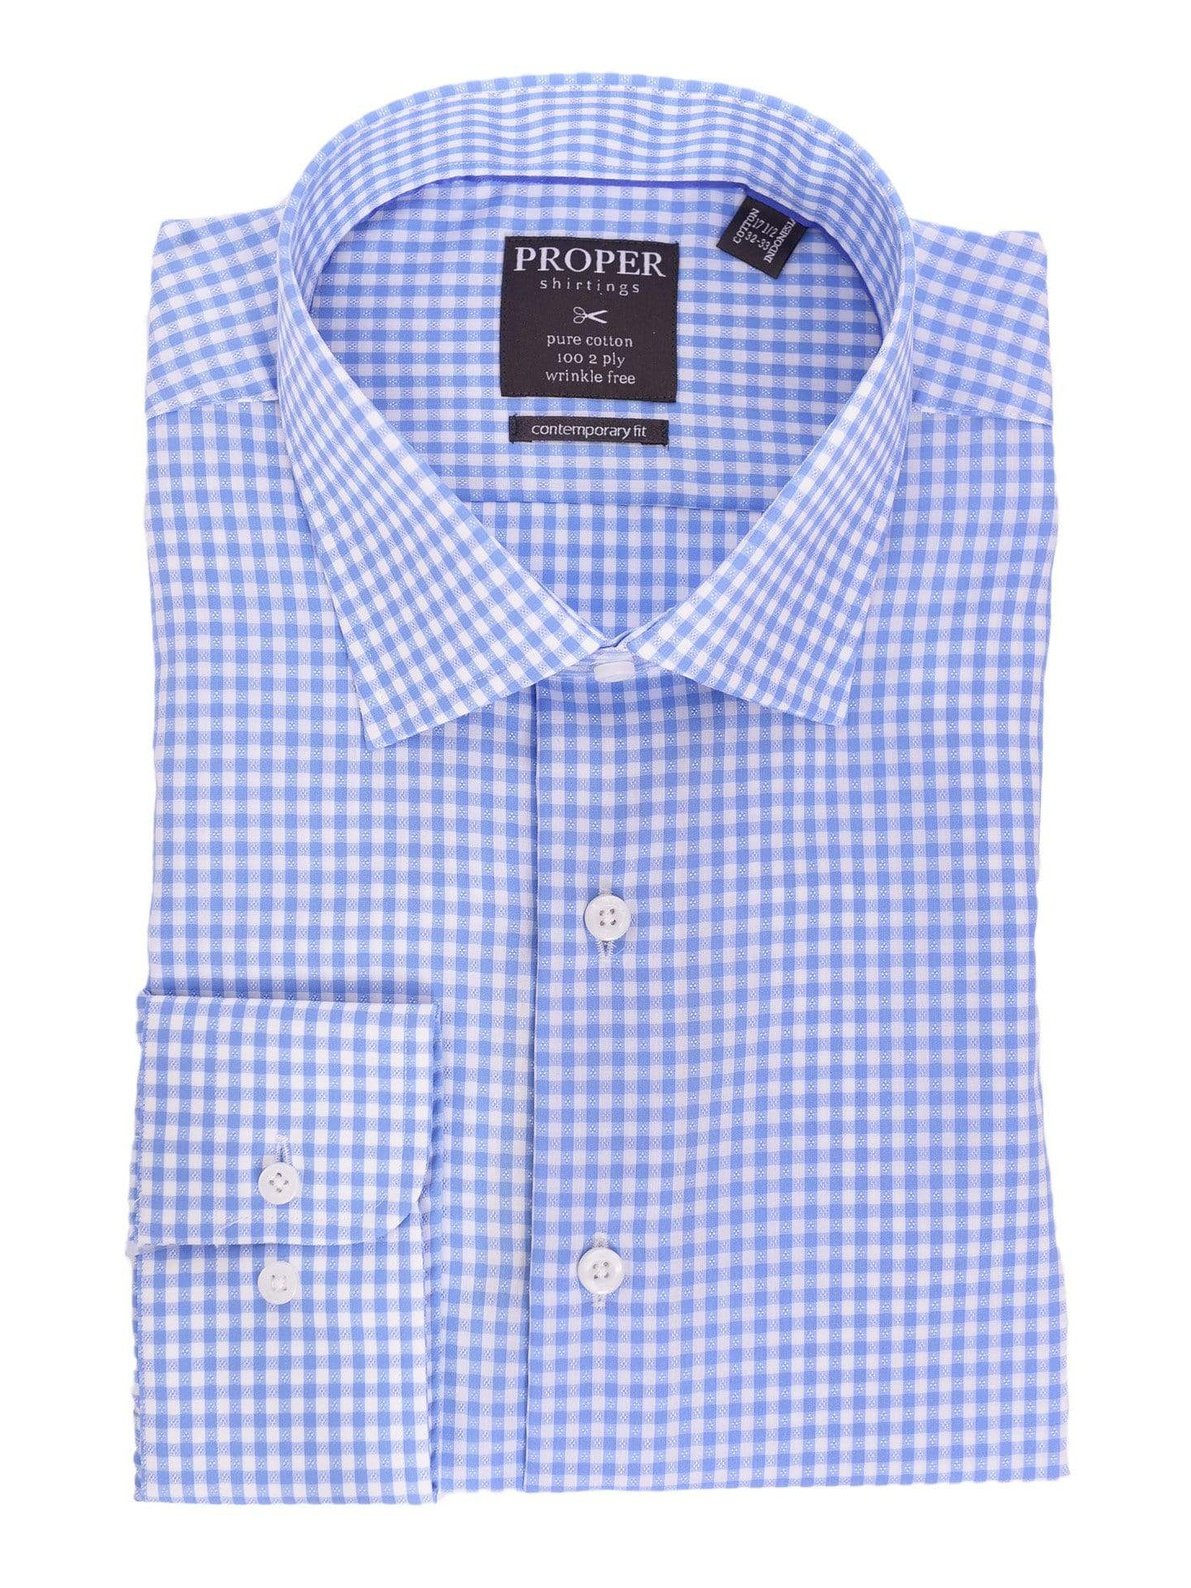 Proper Shirtings SHIRTS 17 1/2 32/33 Blue & White Check Spread Collar Wrinkle Free 100 2 Ply Cotton Dress Shirt